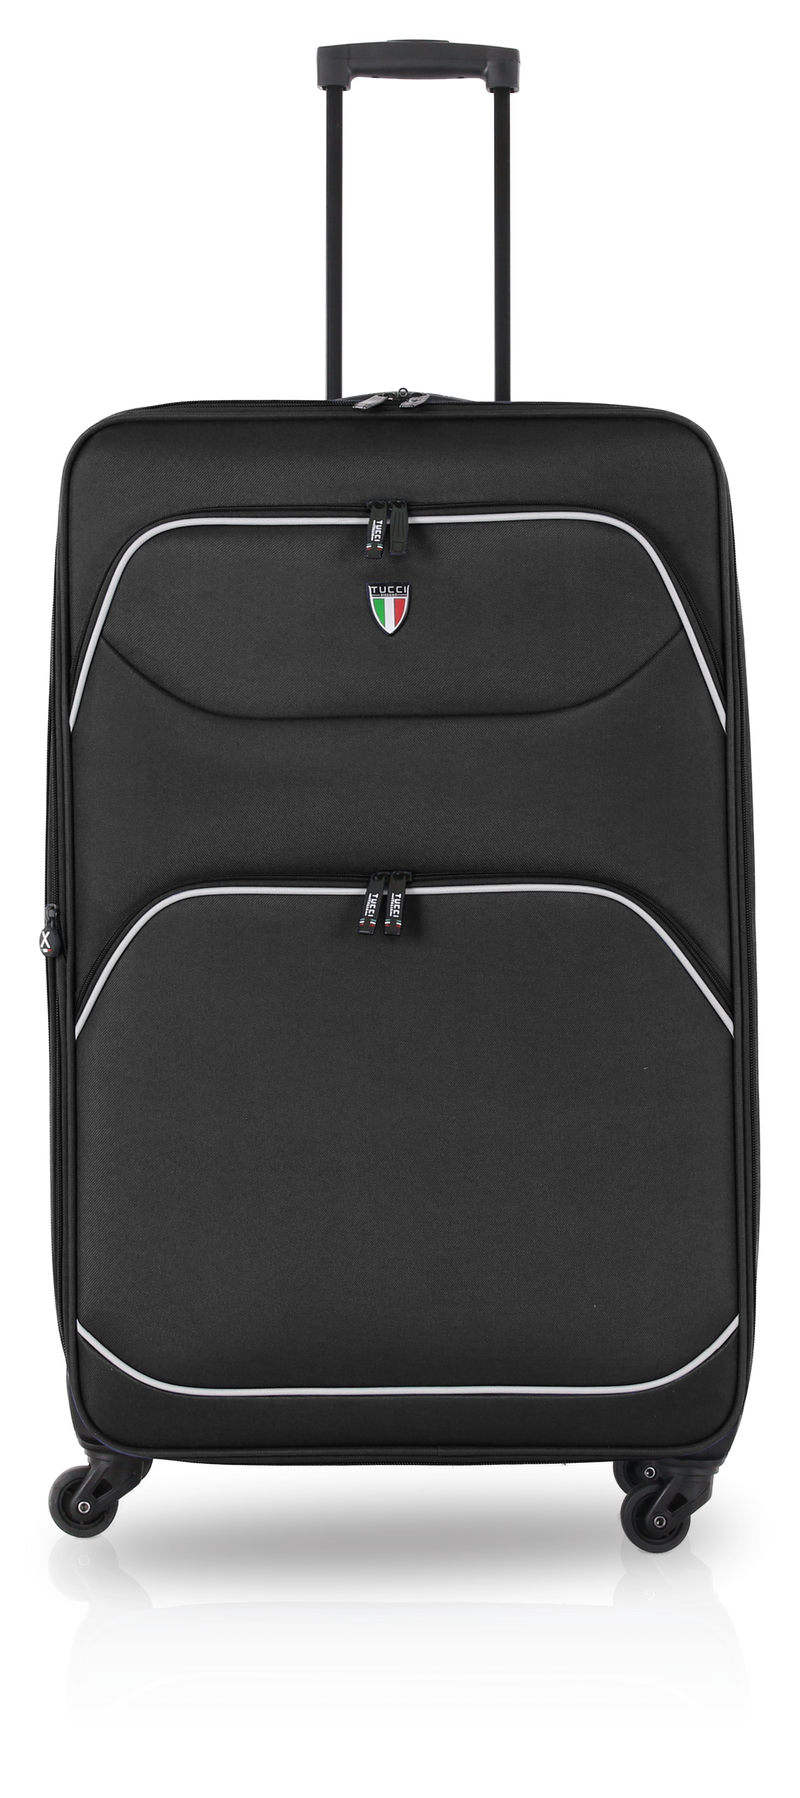 TUCCI Italy BEN FATTO 3 PC (20", 24", 28") Luggage Suitcase Set